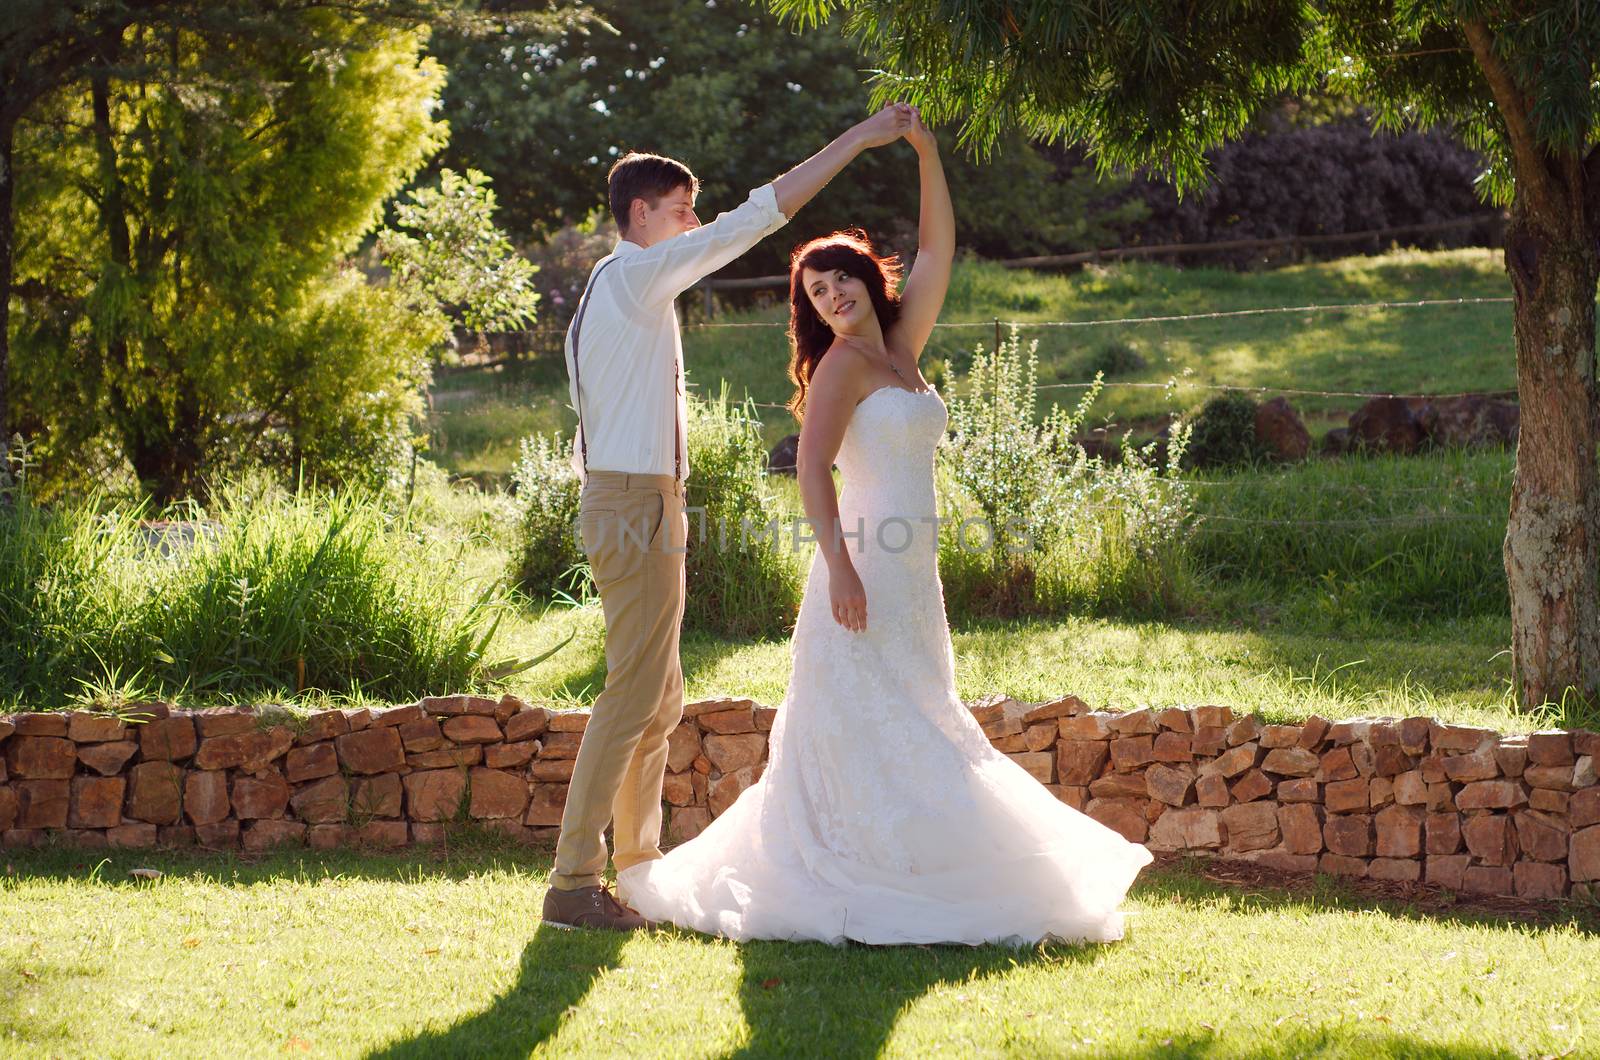 Bride and groom dancing in garden wedding by alistaircotton